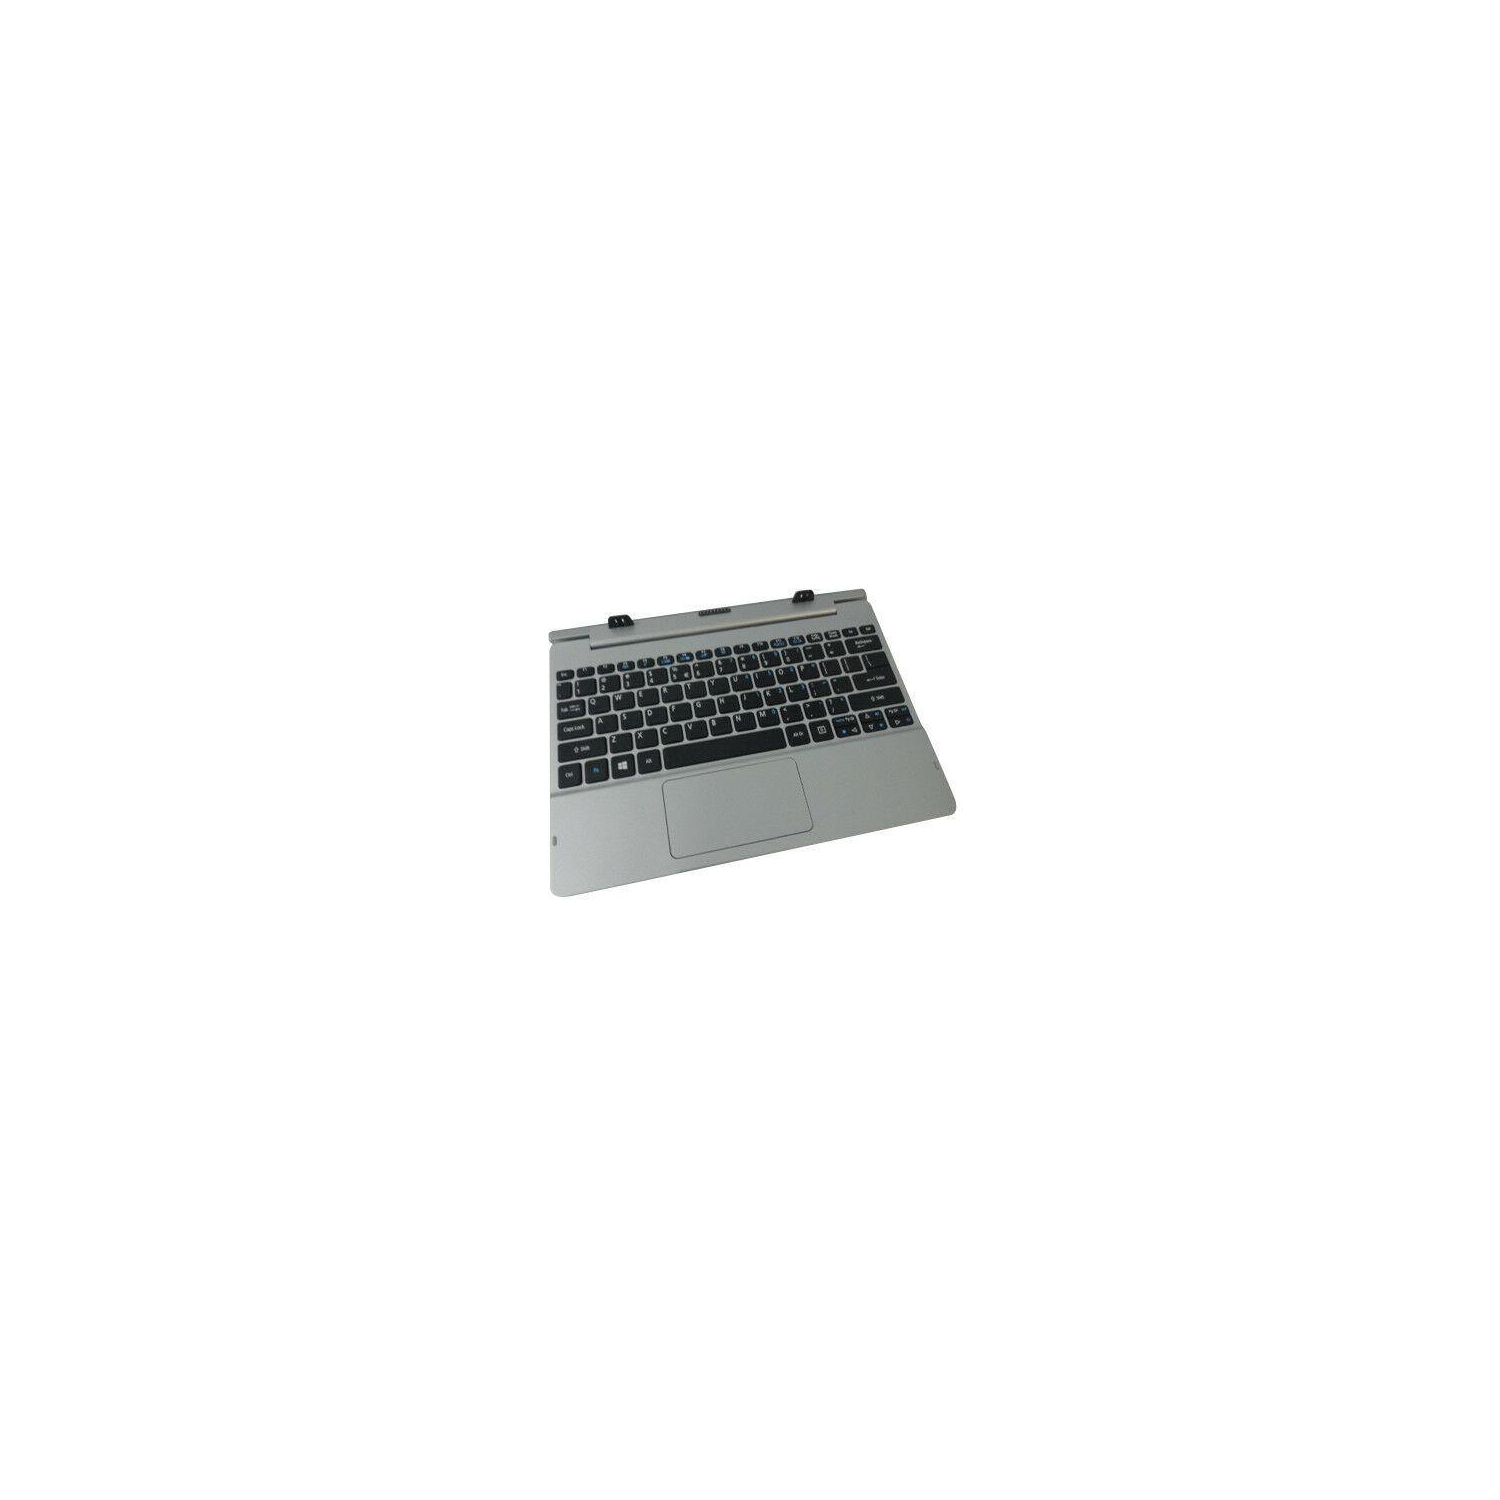 New Acer Aspire Switch 10 SW5-012 Tablet Docking Station Keyboard Dock SW5-011-DOCK